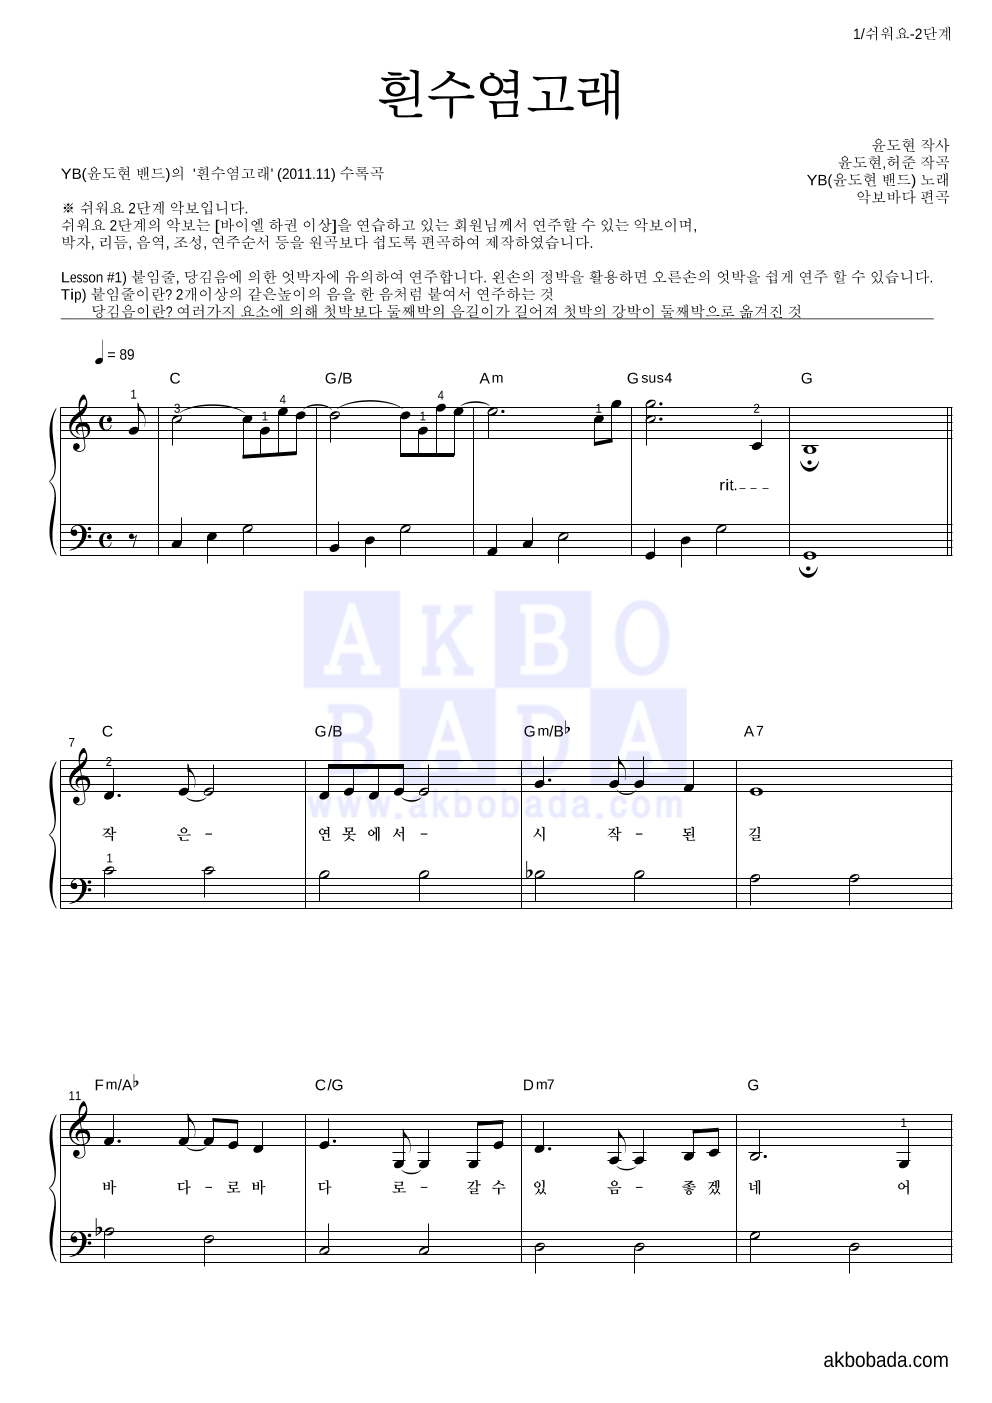 YB(윤도현 밴드) - 흰수염고래 피아노2단-쉬워요 악보 